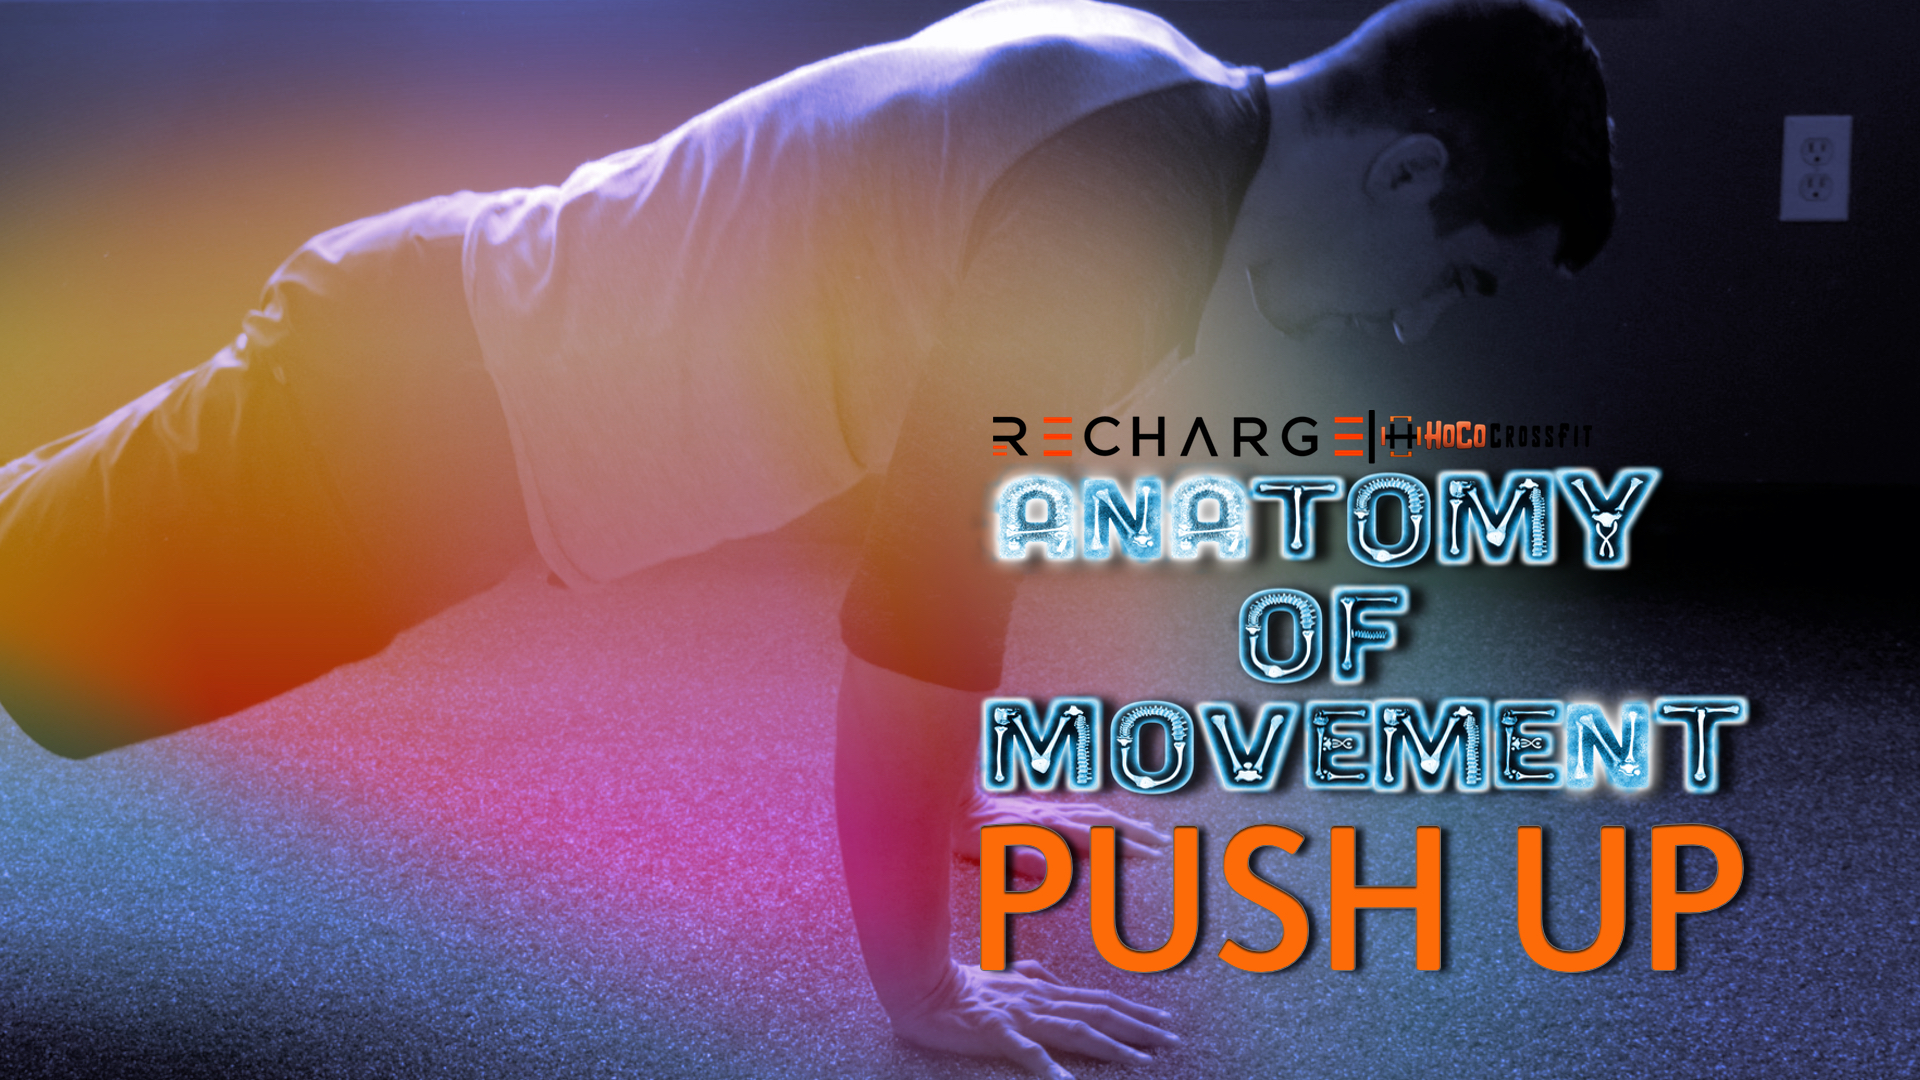 Push Up Anatomy of Movement